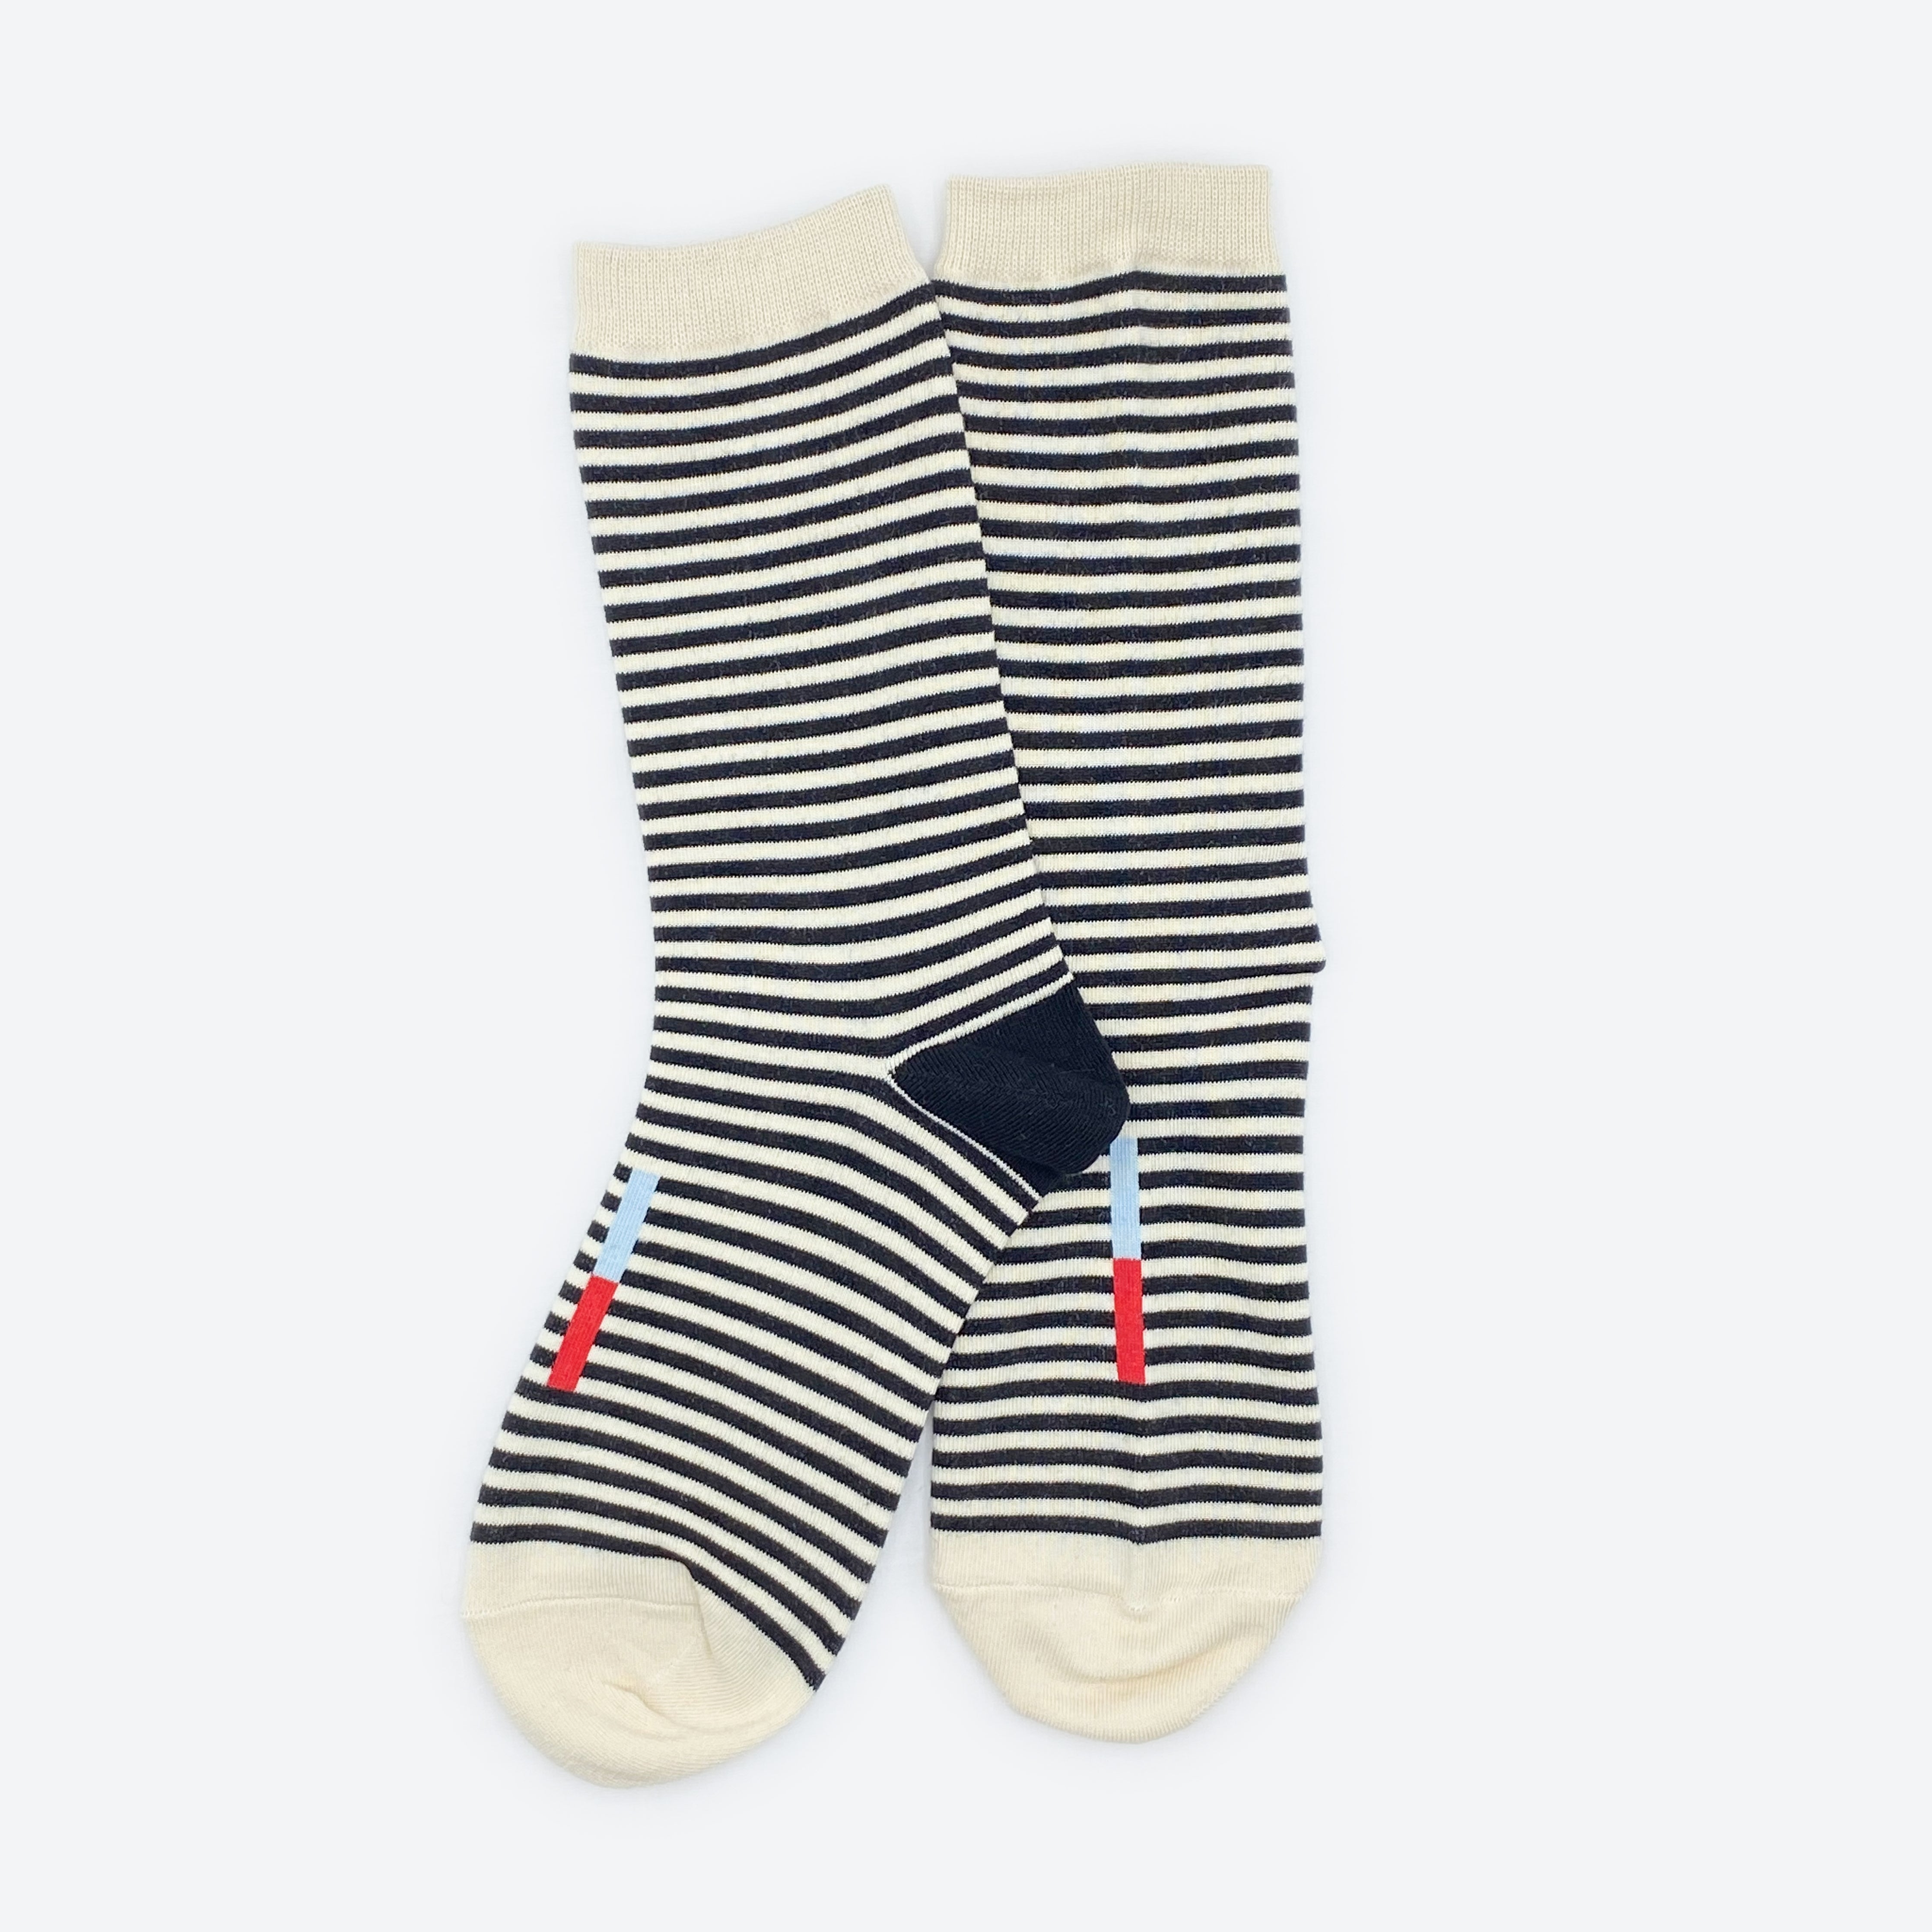 Hooray Sock Co.&#39;s Cole Crew Socks: Classic black &amp; off-white stripes, 80% cotton/20% spandex blend. Men&#39;s (8-12) &amp; women&#39;s (4-10) sizes.